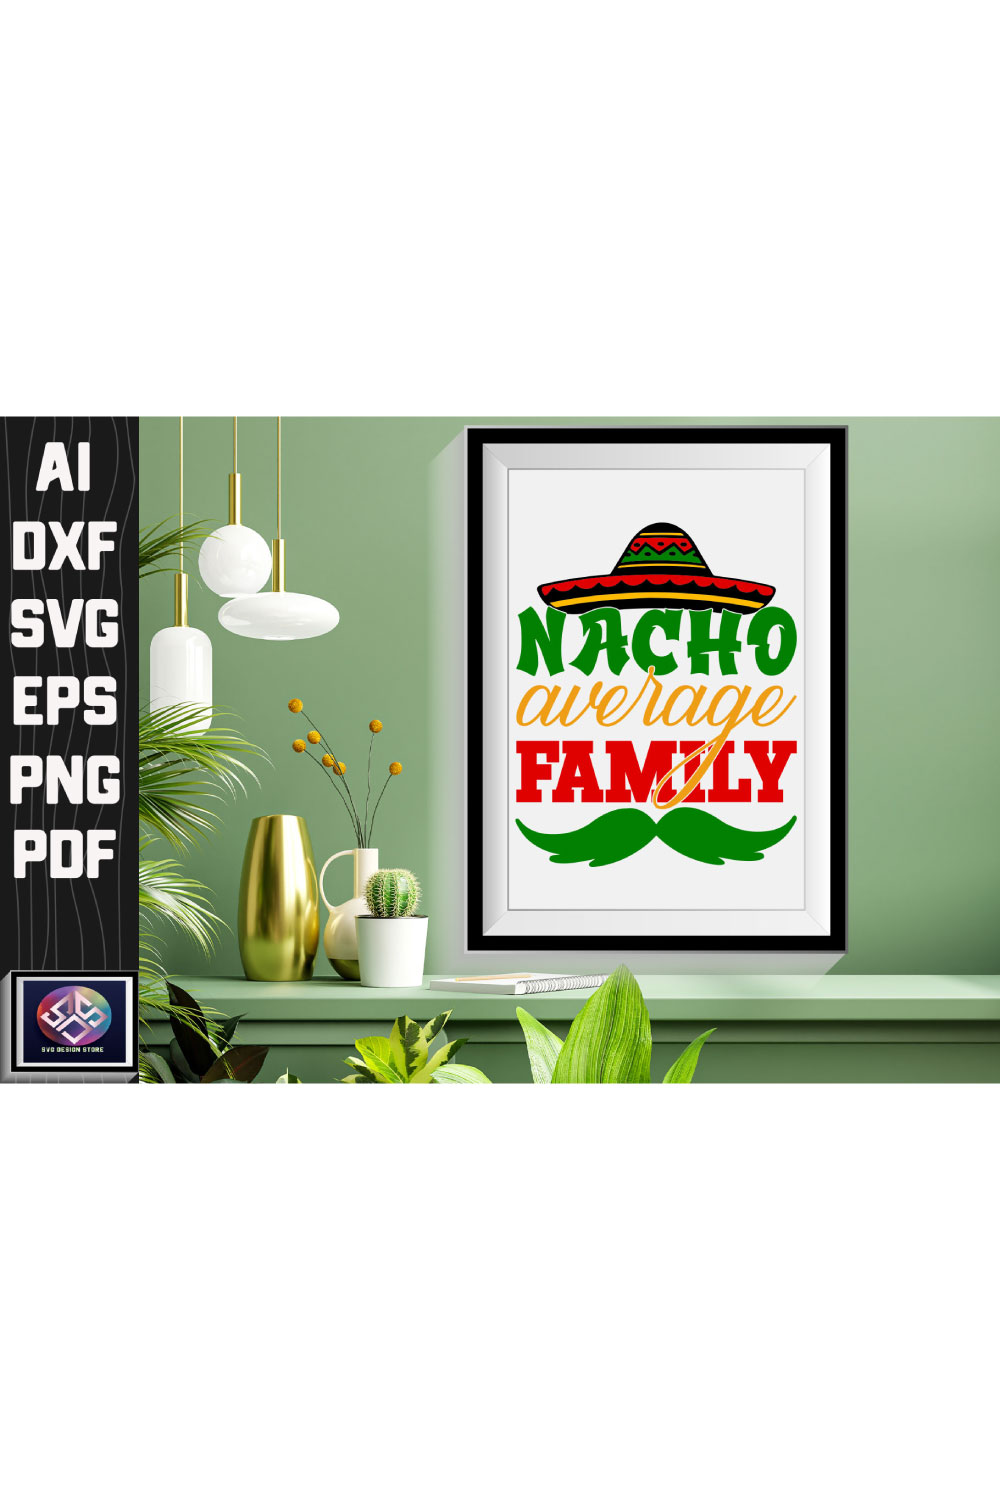 Nacho Average Family pinterest preview image.